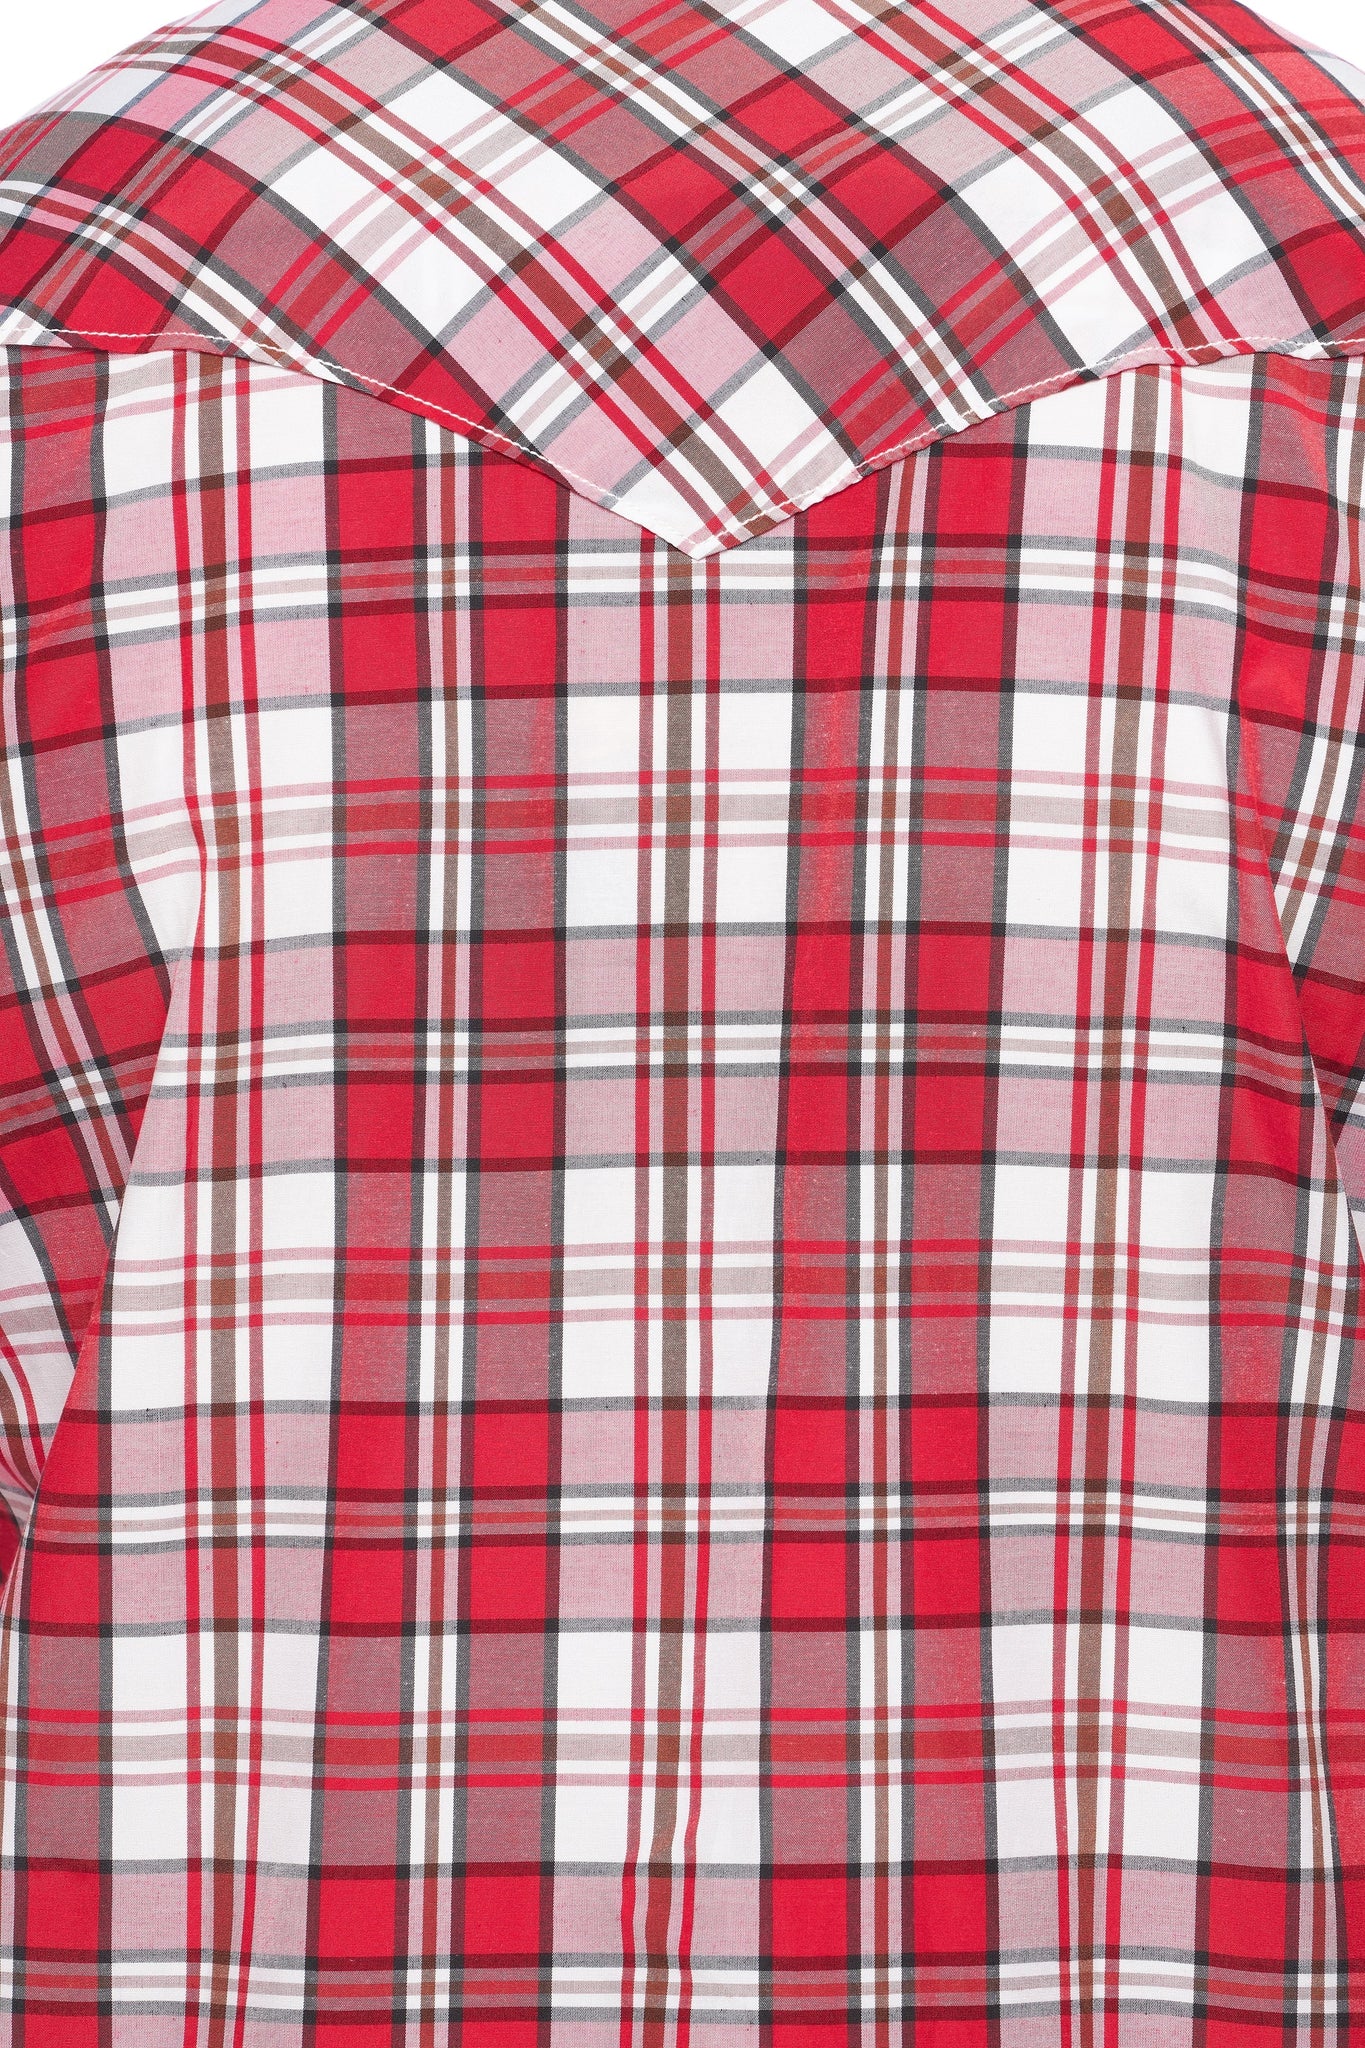 Men's Western Short Sleeve Pearl Snaps Plaid Shirt -PS400S-411